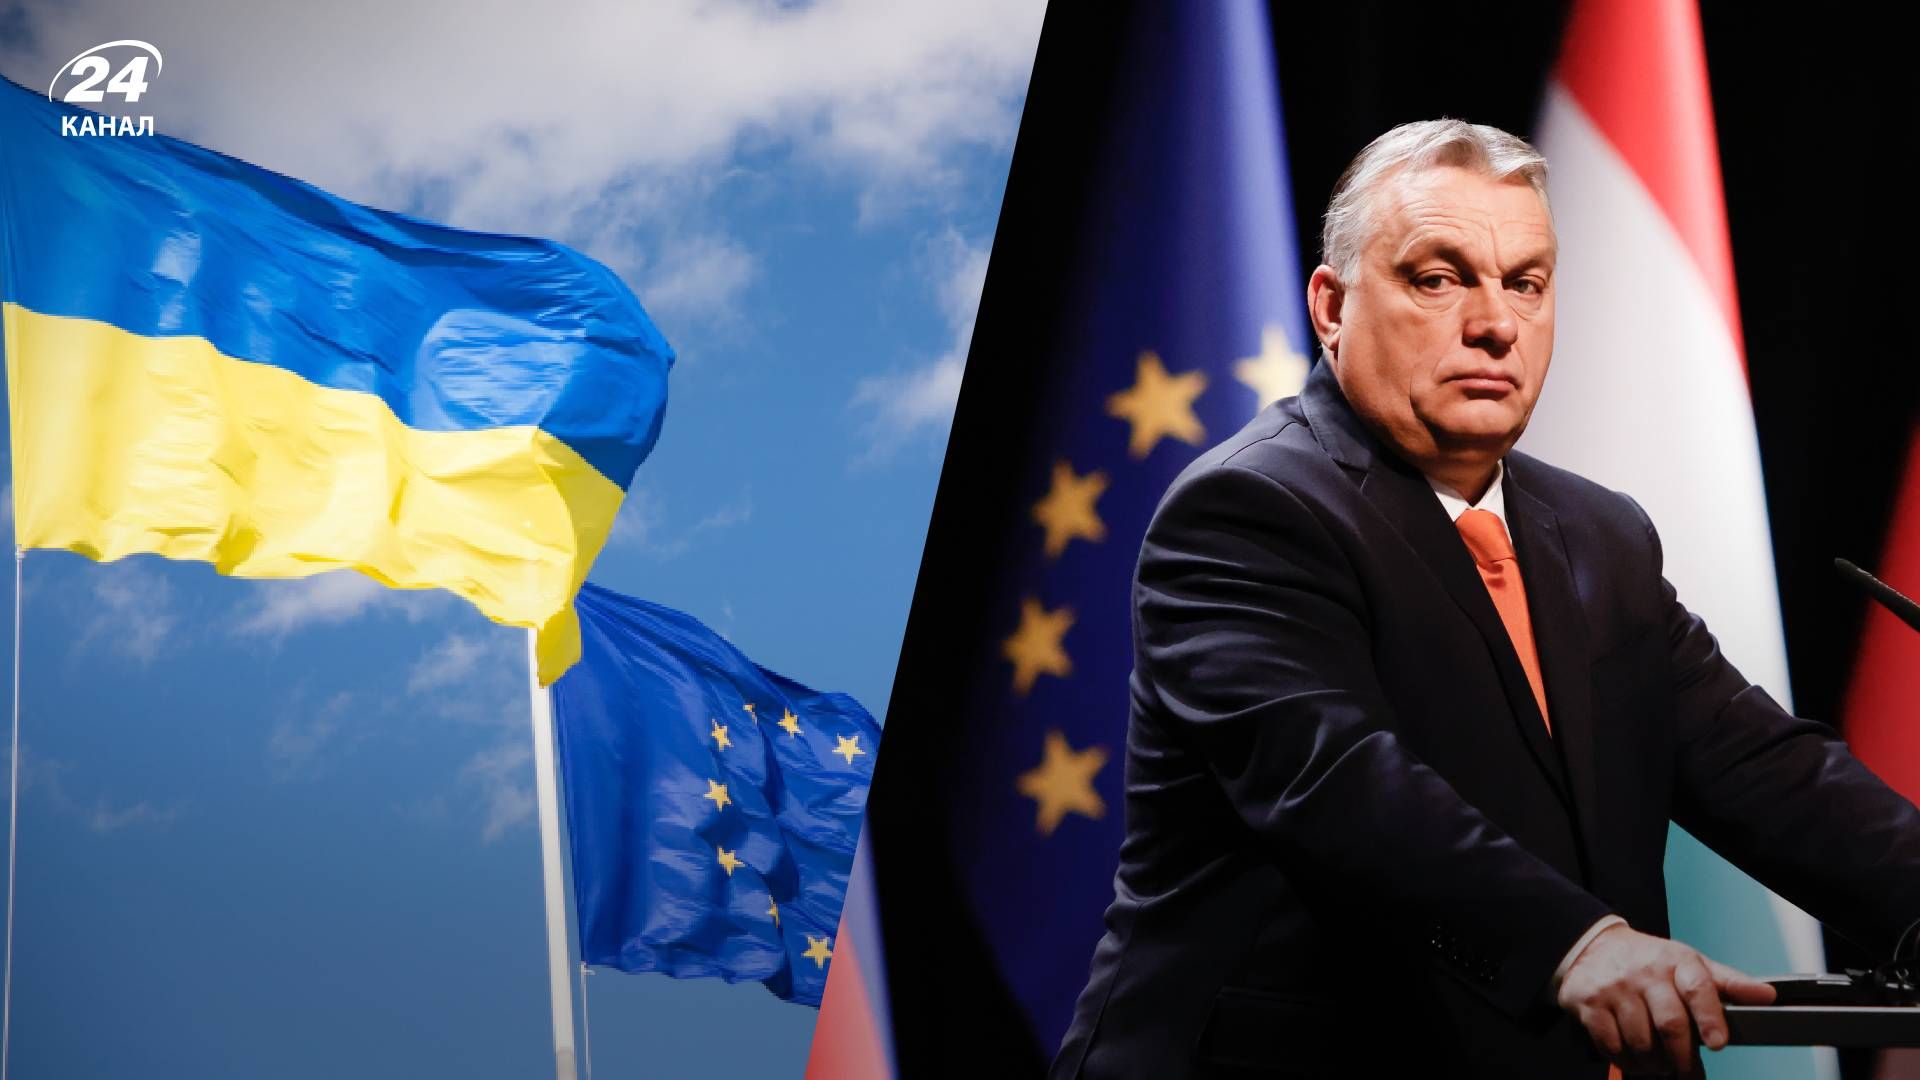 Имеют ли Украина и ЕС инструменты влияния на Венгрию